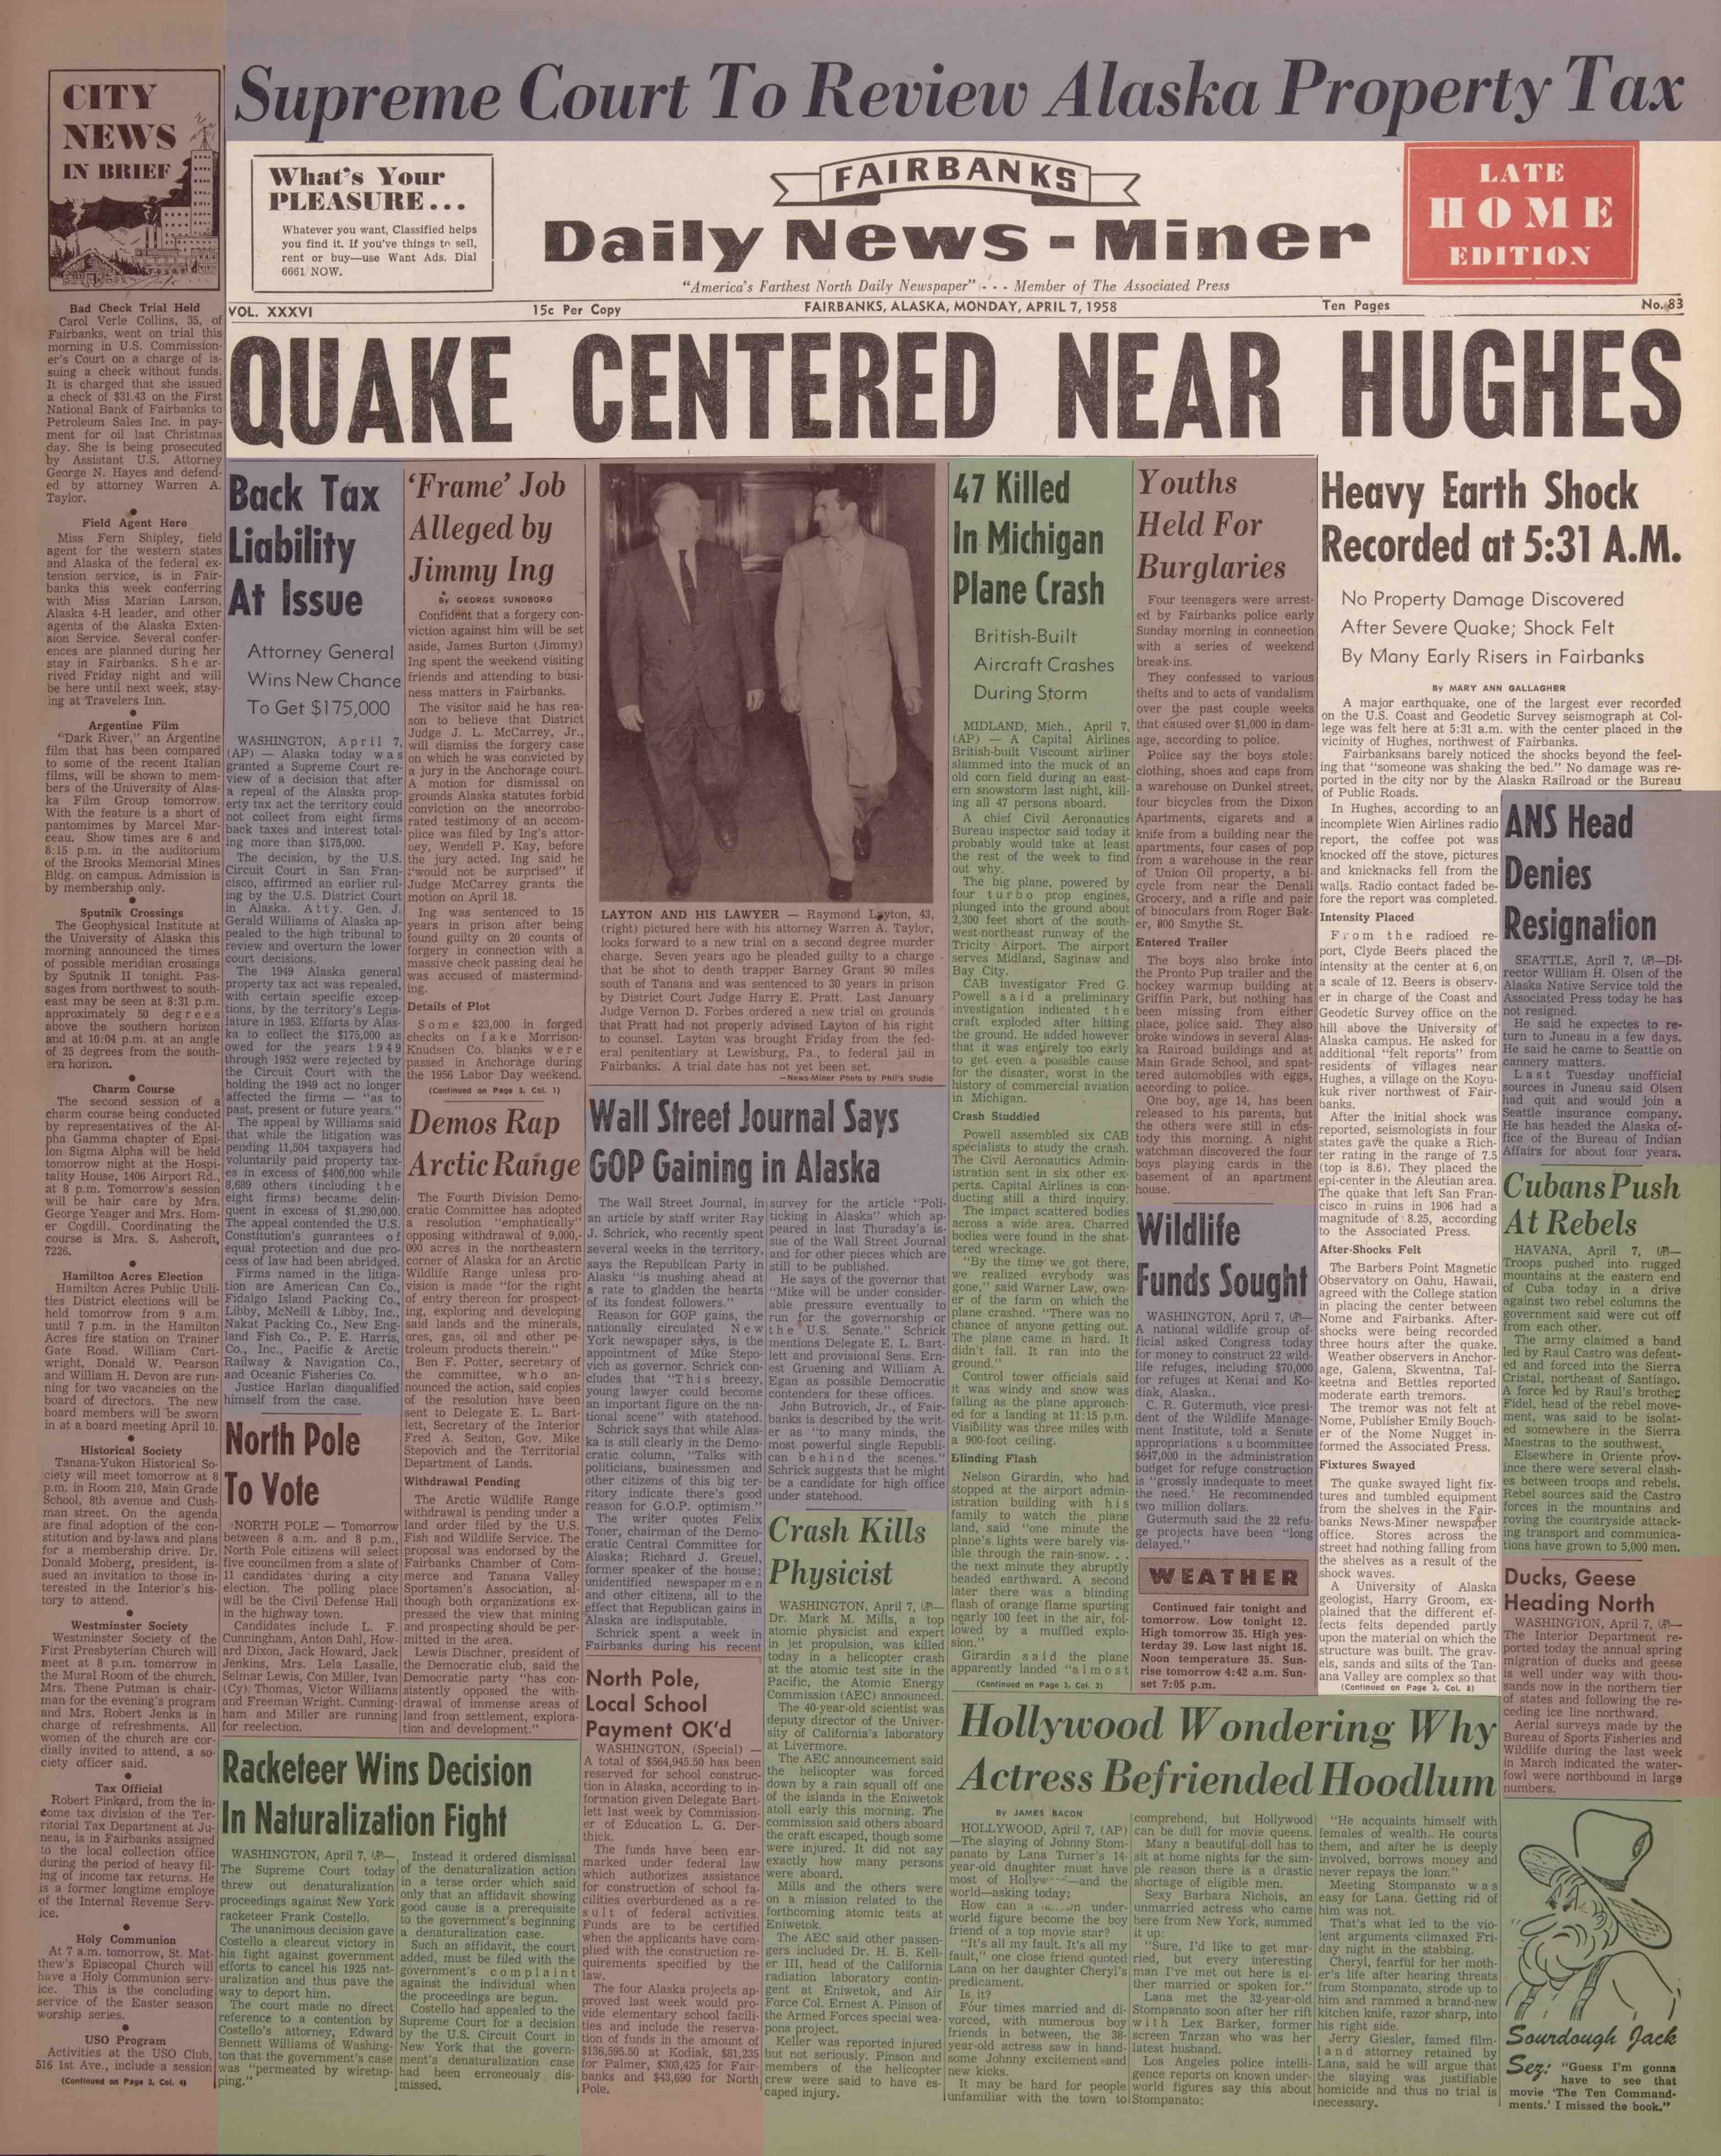 1958 April 7, Fairbanks Daily News-Miner (pg 1)